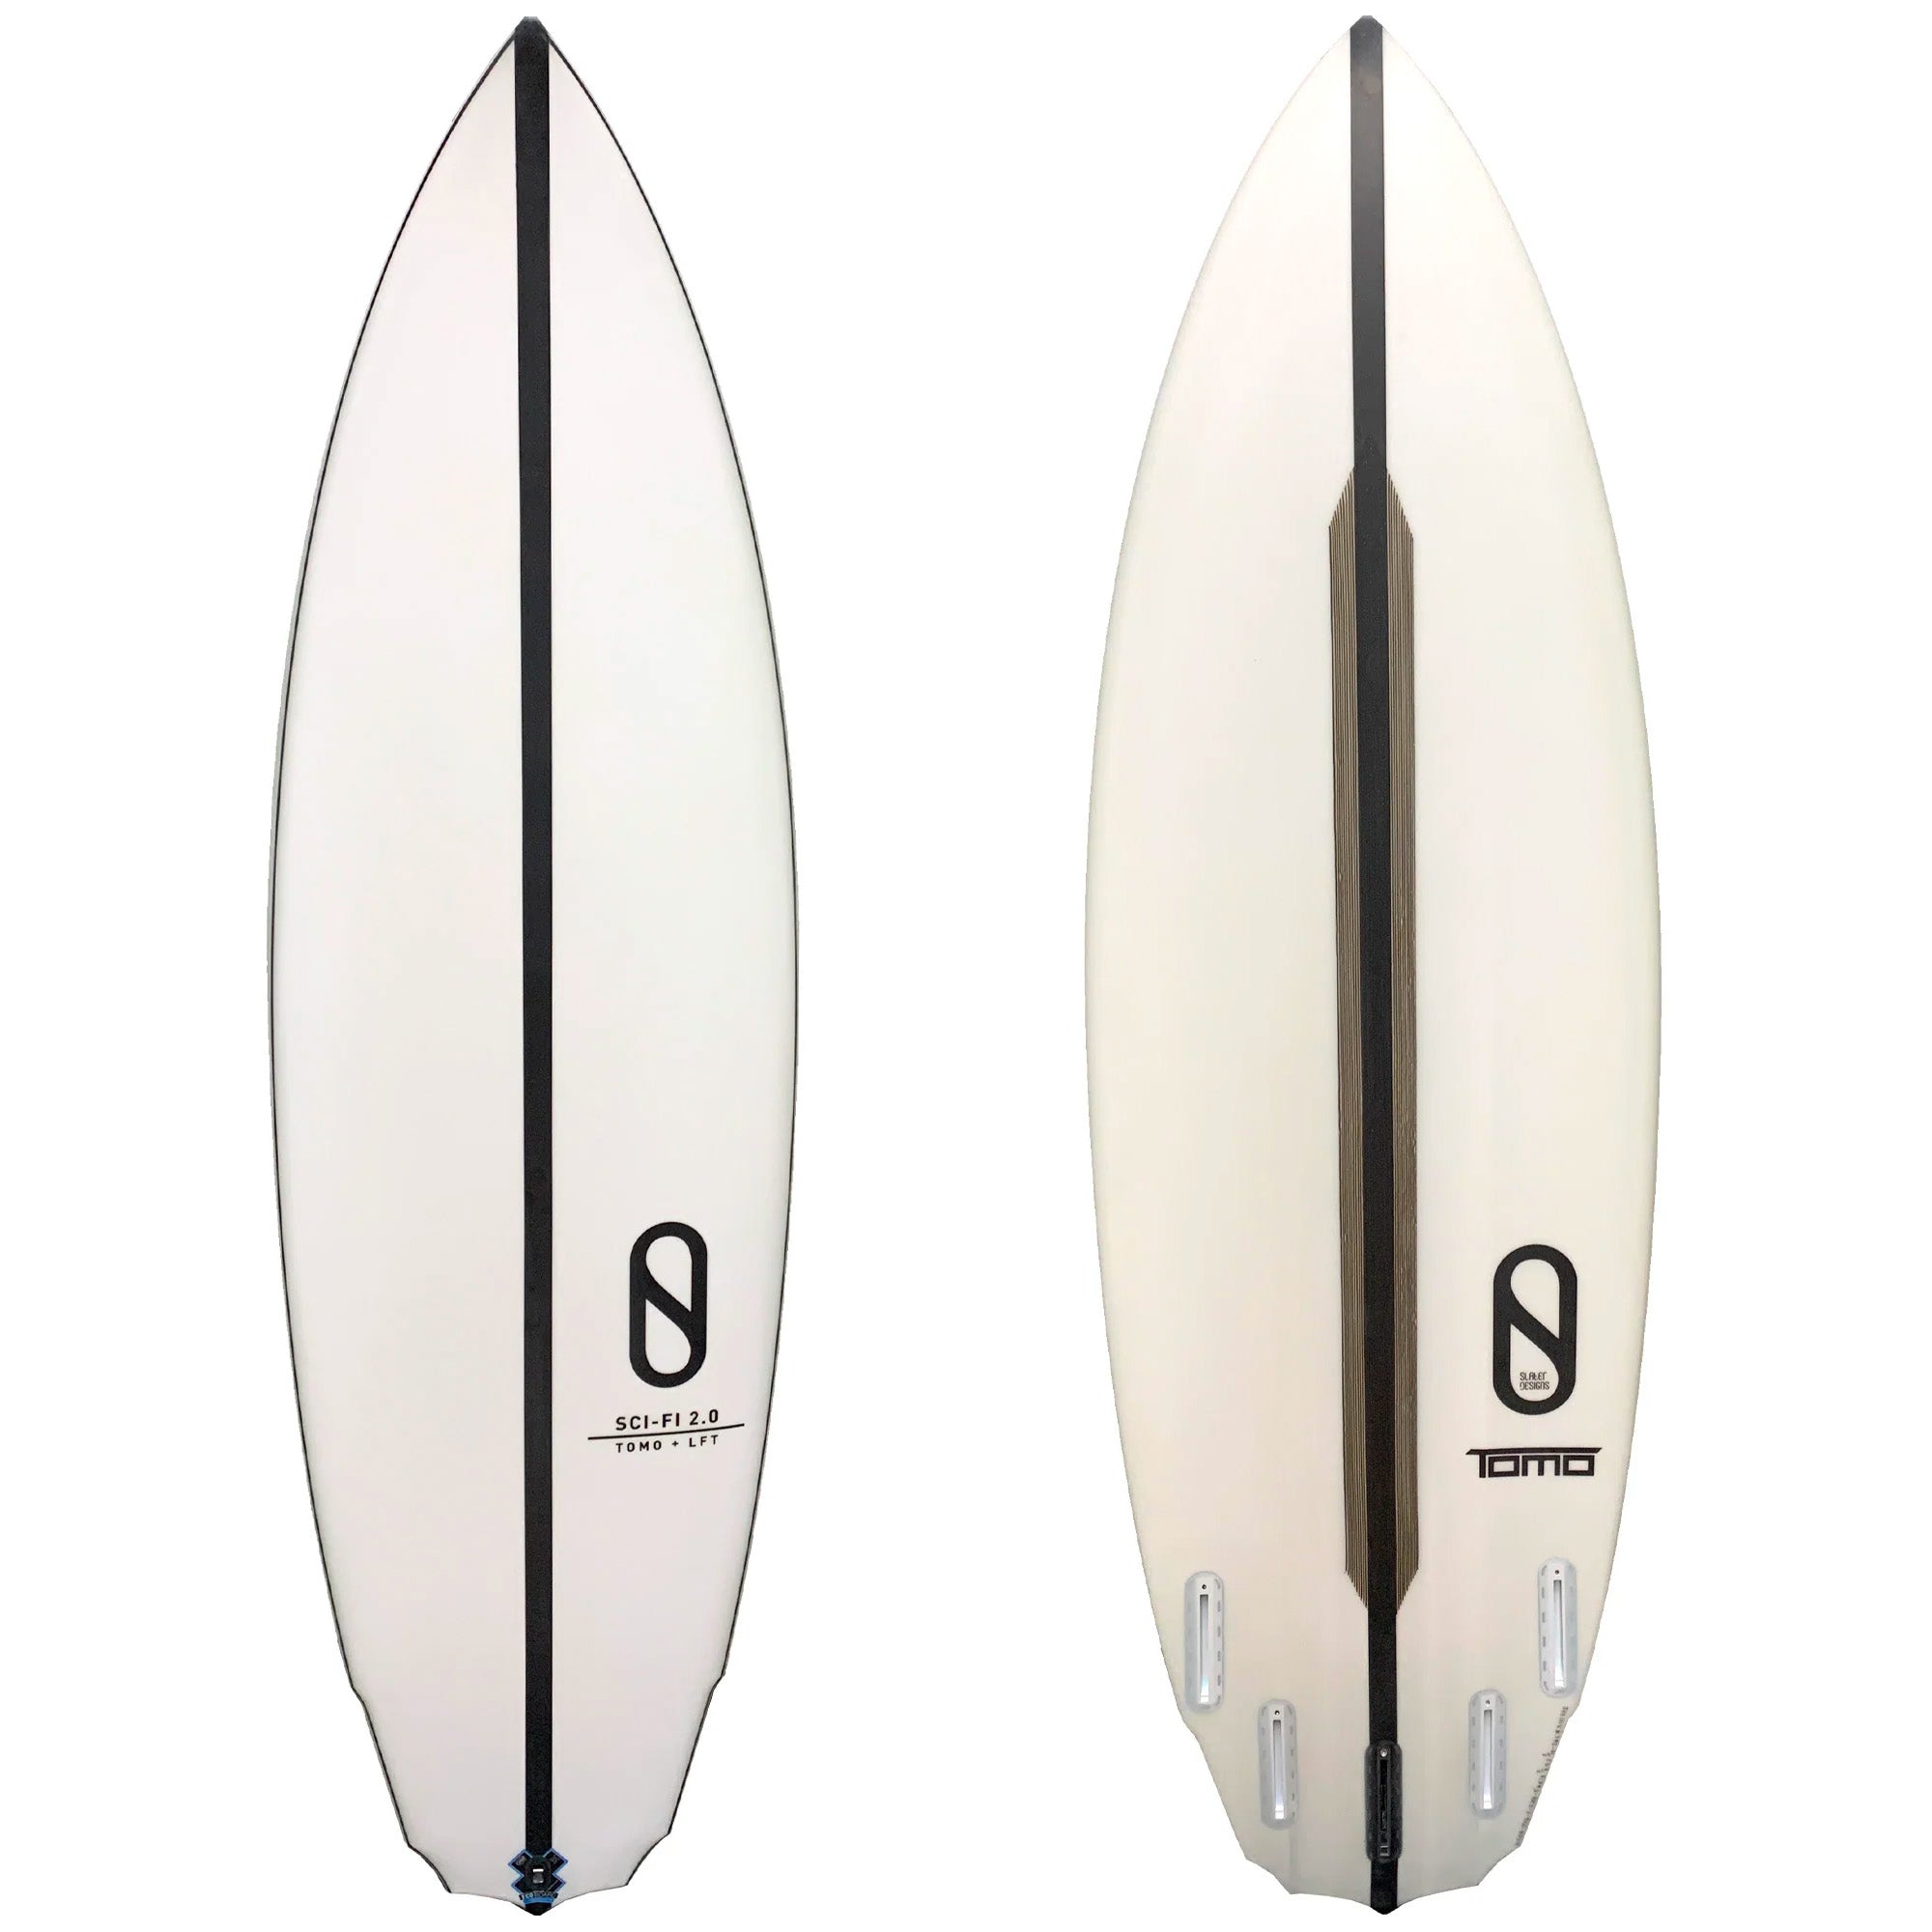 Firewire Sci-Fi 2.0 Slater Designs LFT Surfboard - Futures